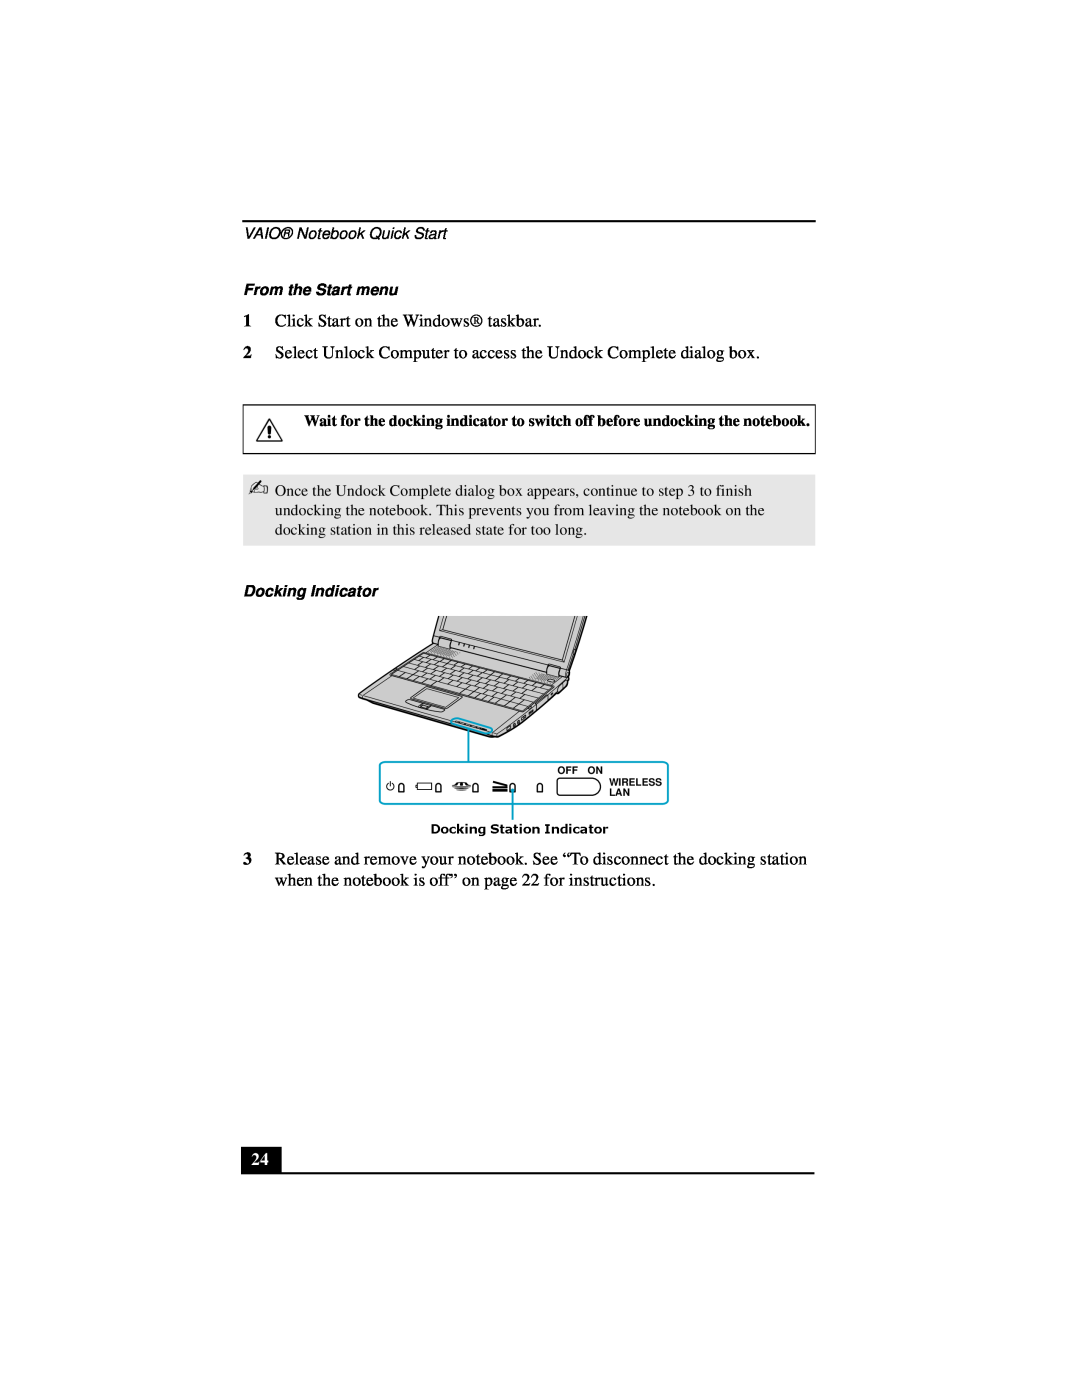 Sony PCG-R505DSP Click Start on the Windows taskbar, Select Unlock Computer to access the Undock Complete dialog box 